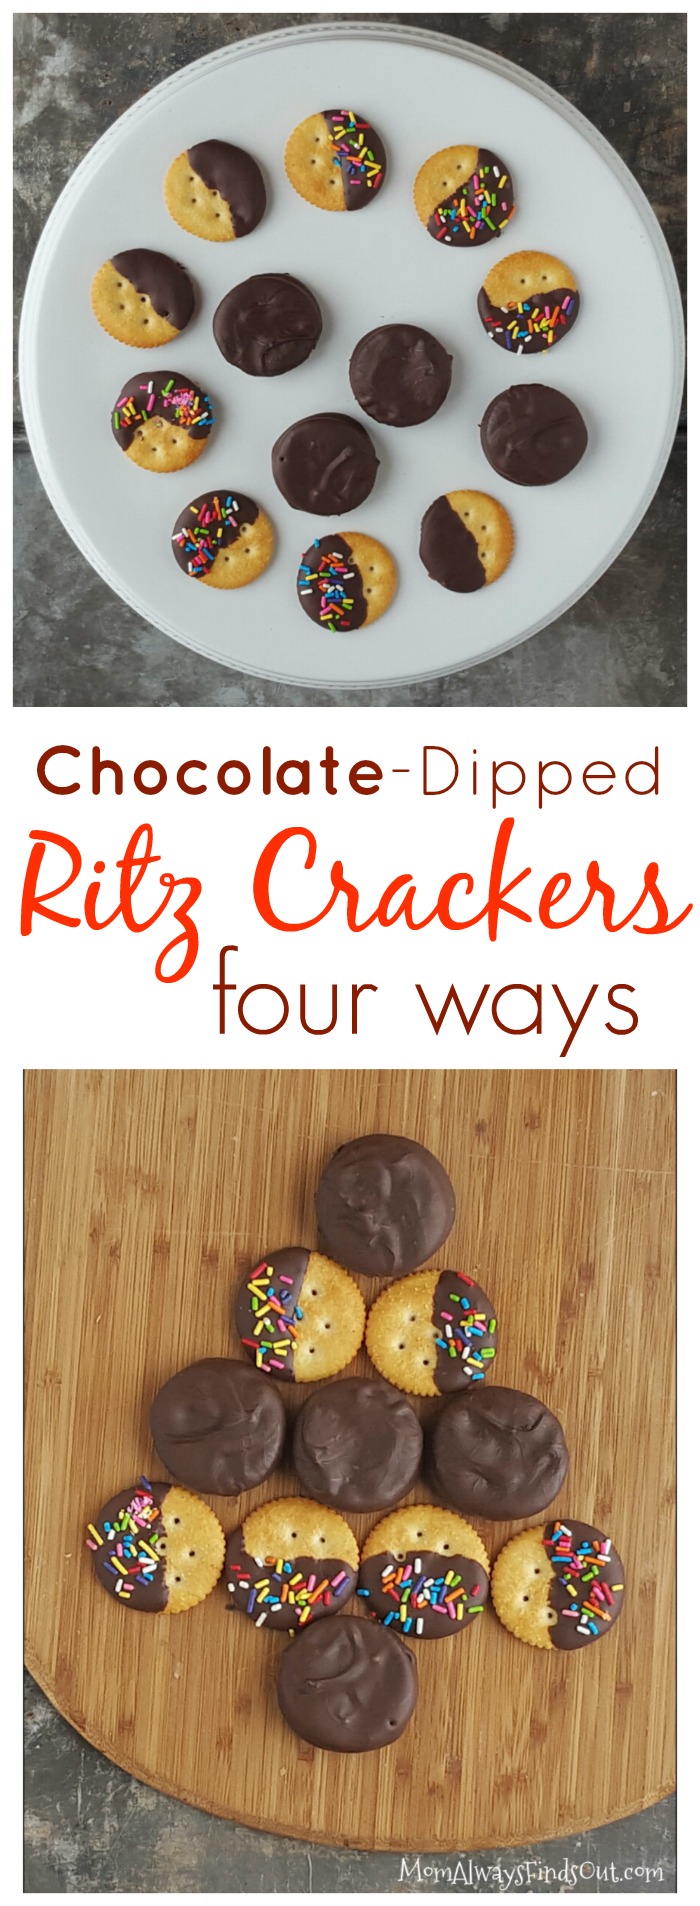 Ritz Crackers Chocolate Dipped